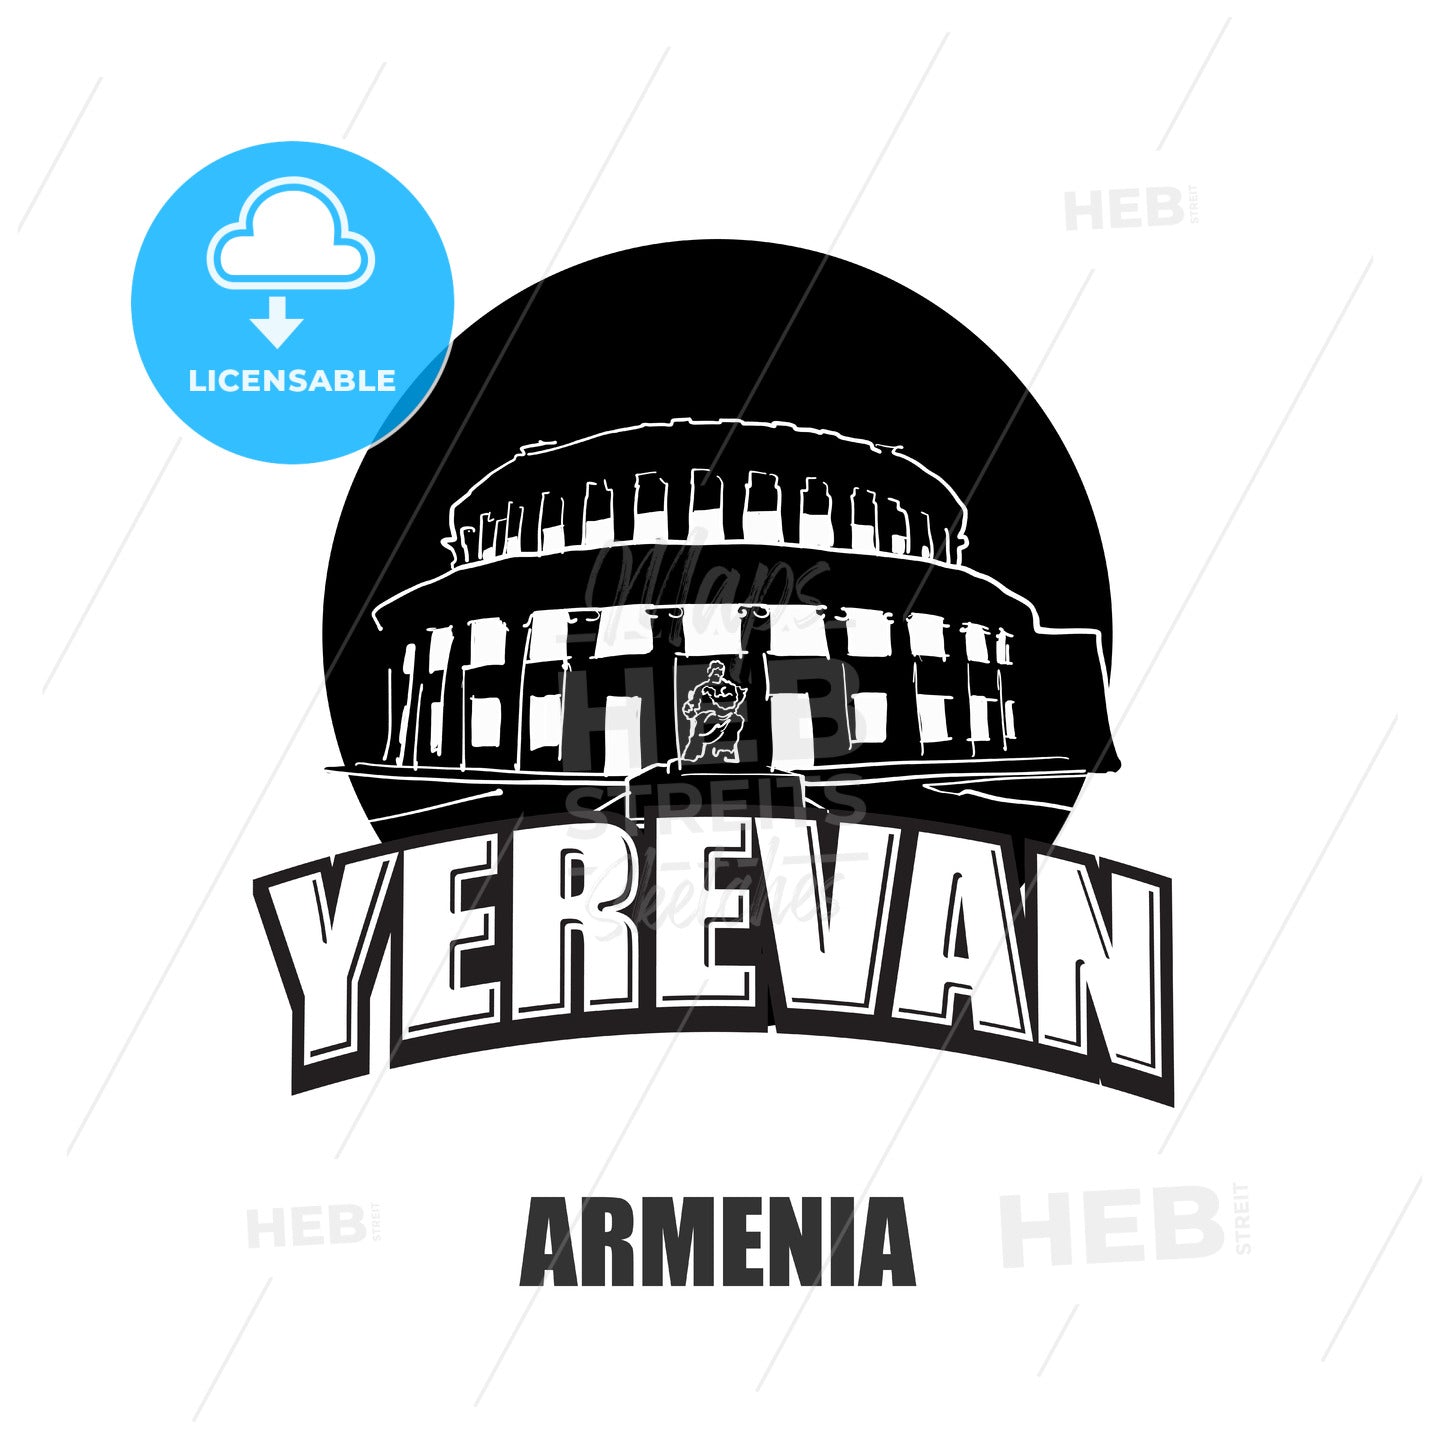 Yerevan, Armenia, black and white logo – instant download